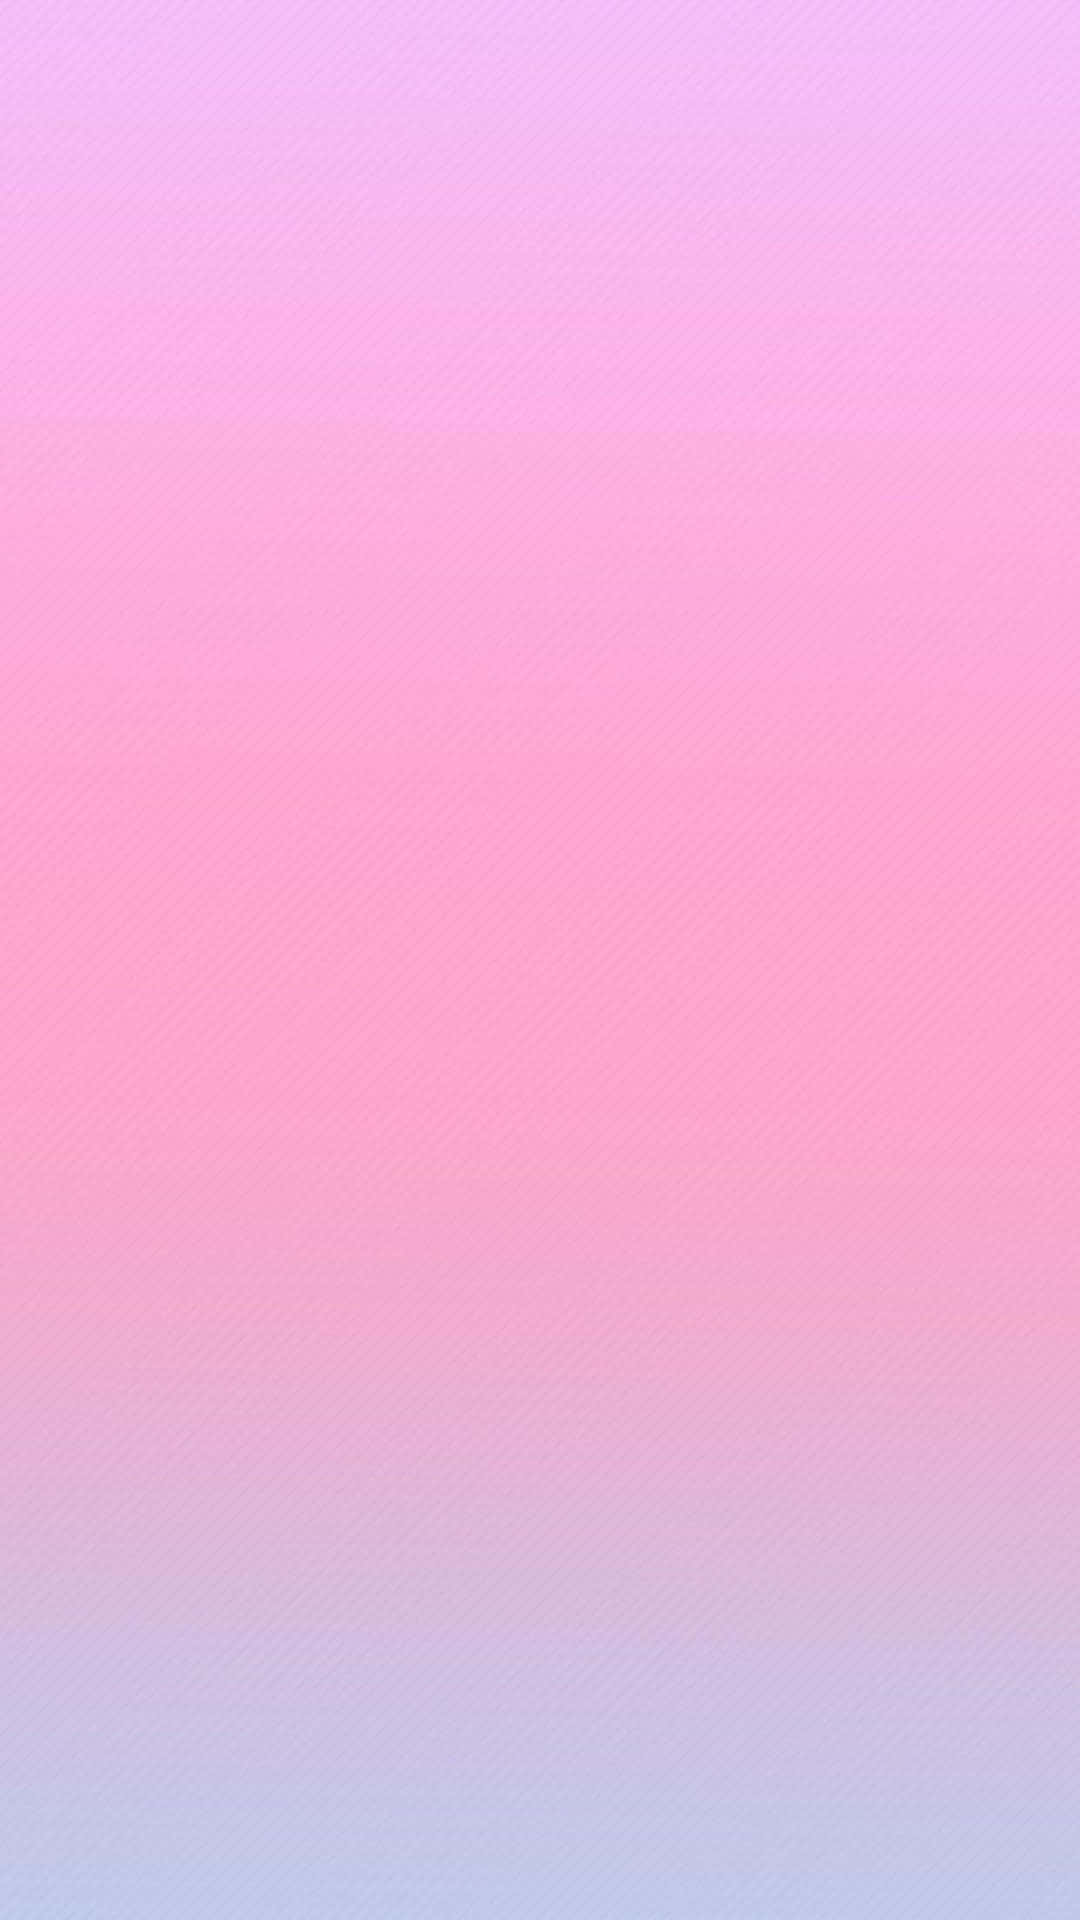 100+] Pink Gradient Backgrounds